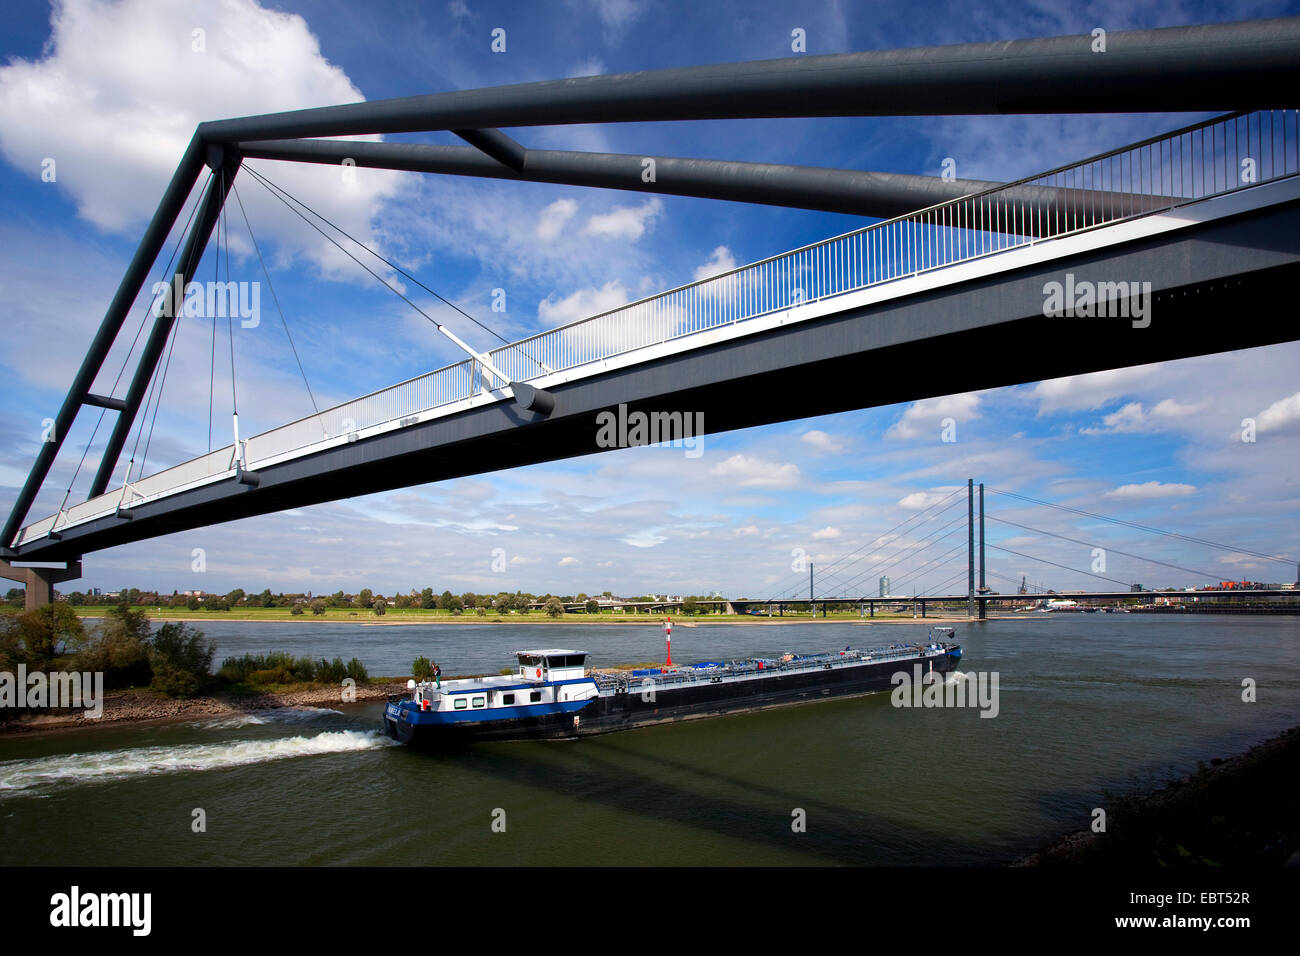 a ship on Rhine crossing pedestrian bridge, Rheinkniebruecke in background, Germany, North Rhine-Westphalia, Duesseldorf Stock Photo